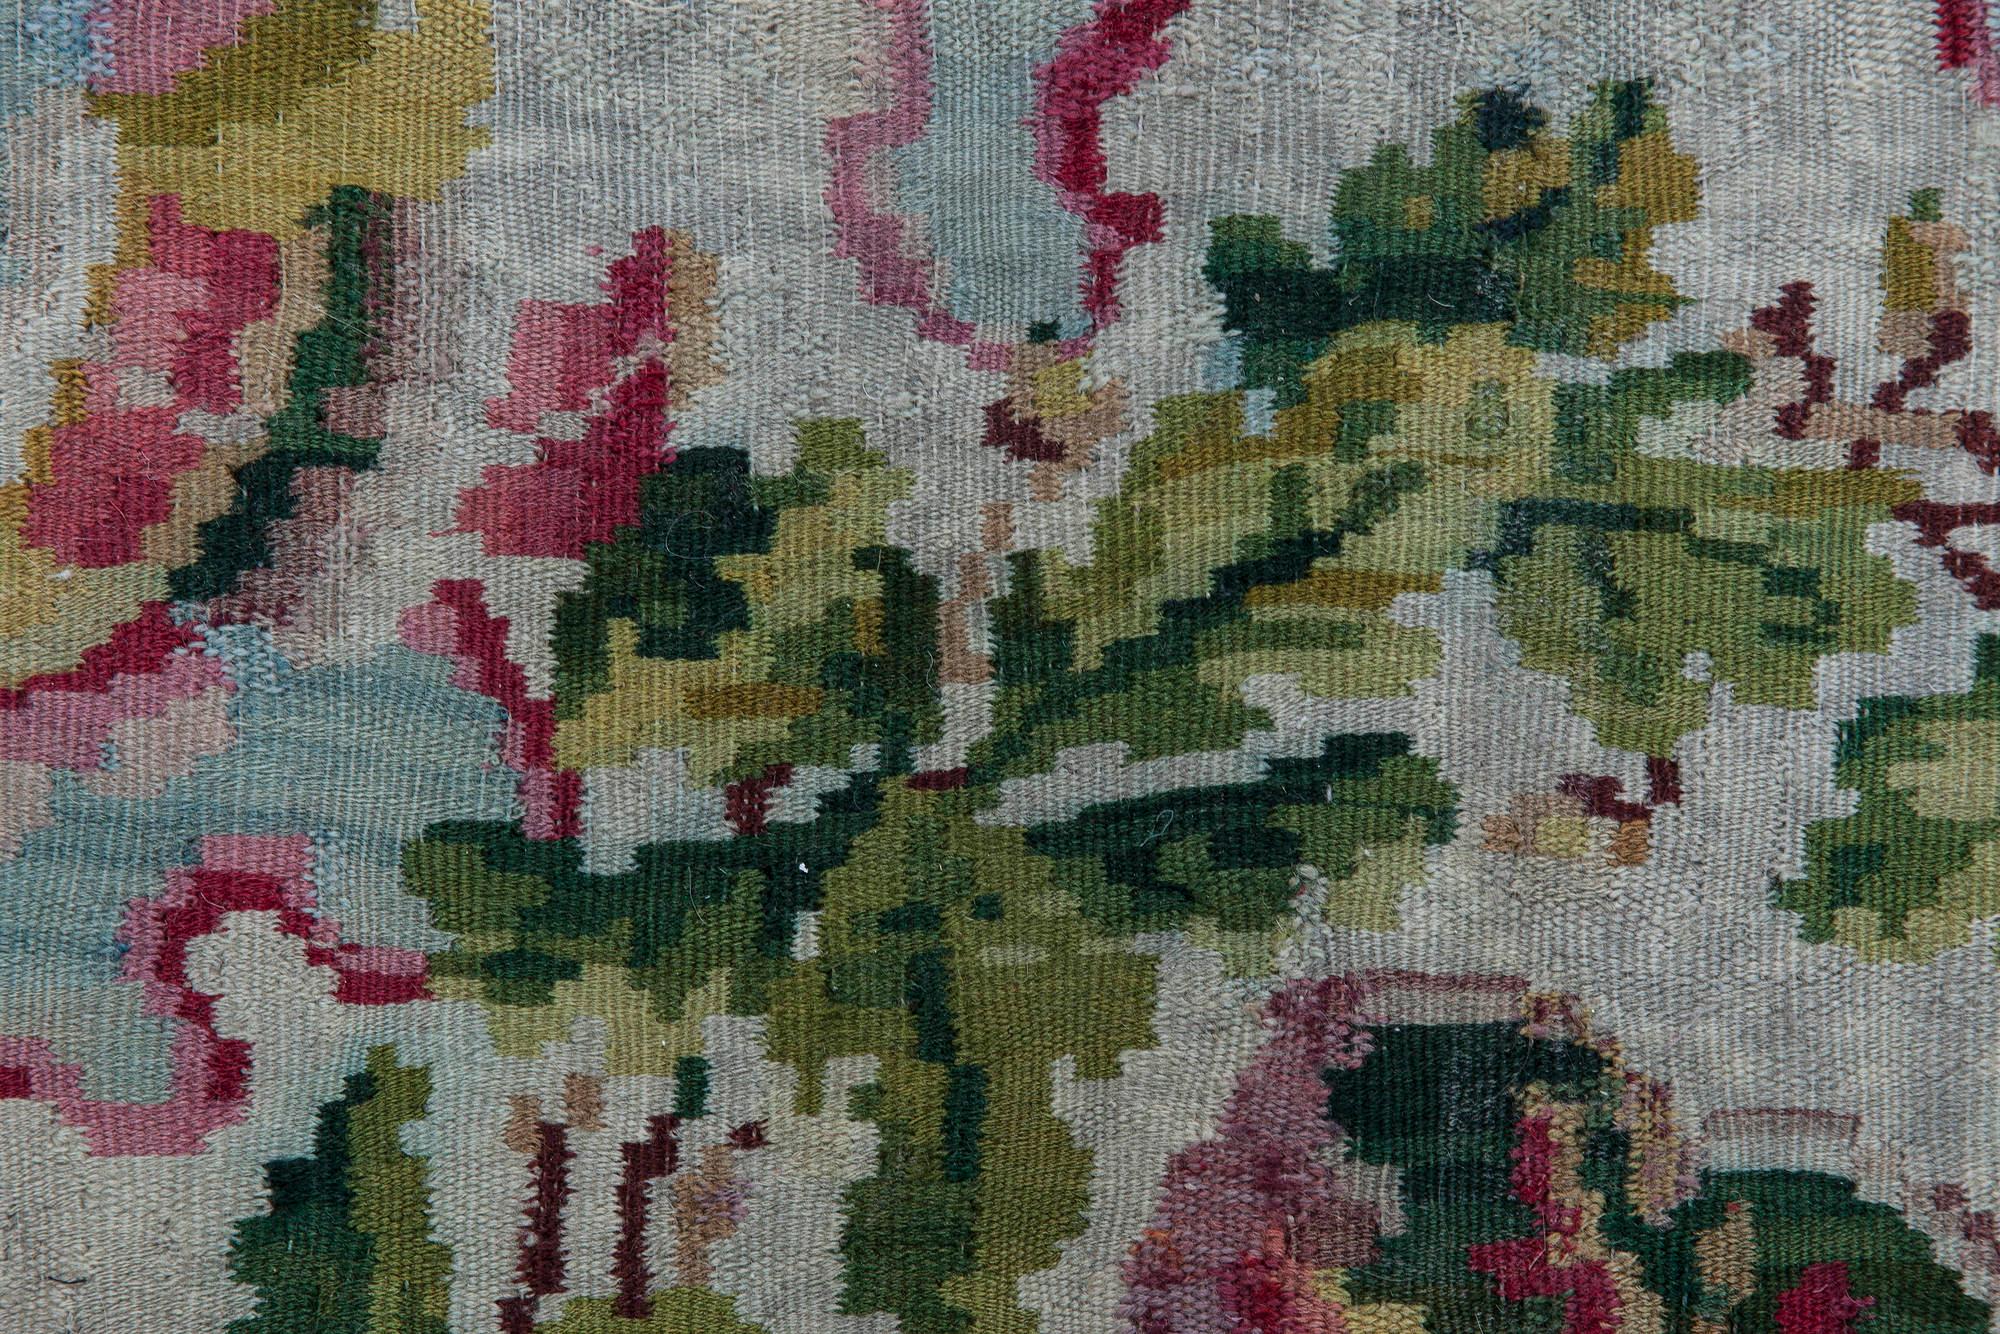 19th century Bessarabian floral design wool rug.
Size: 6'0